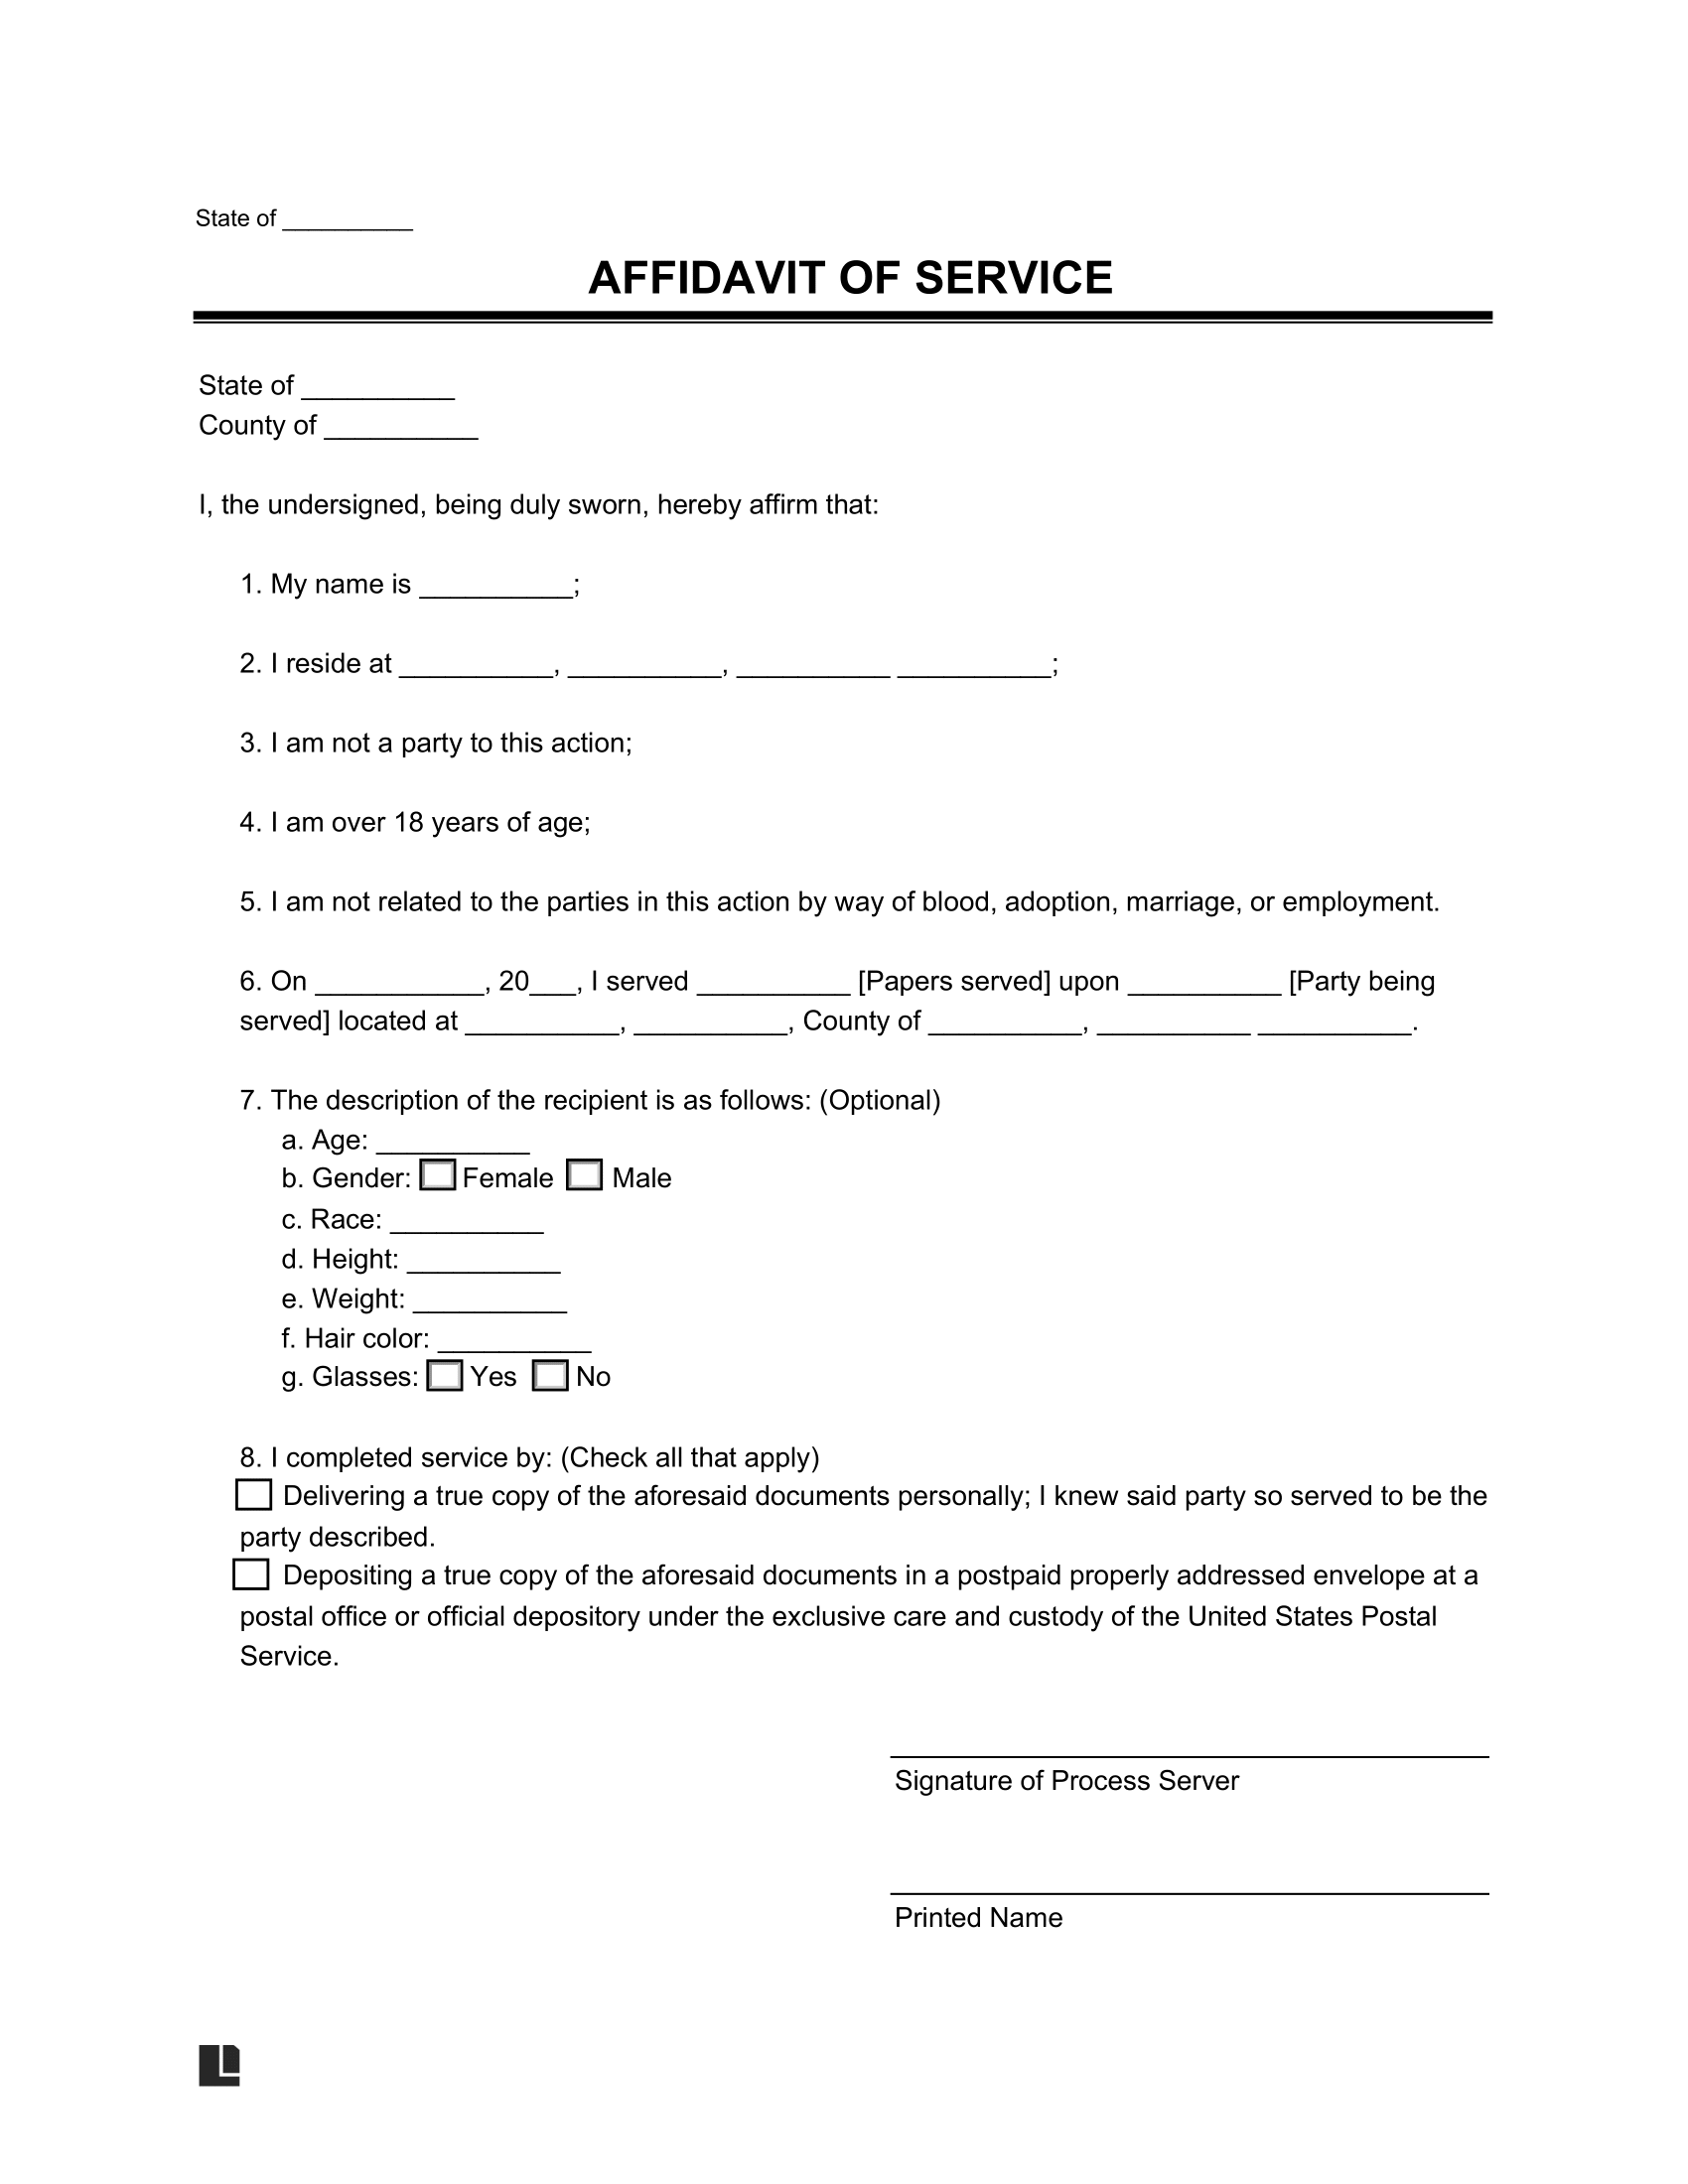 Affidavit of Service Template